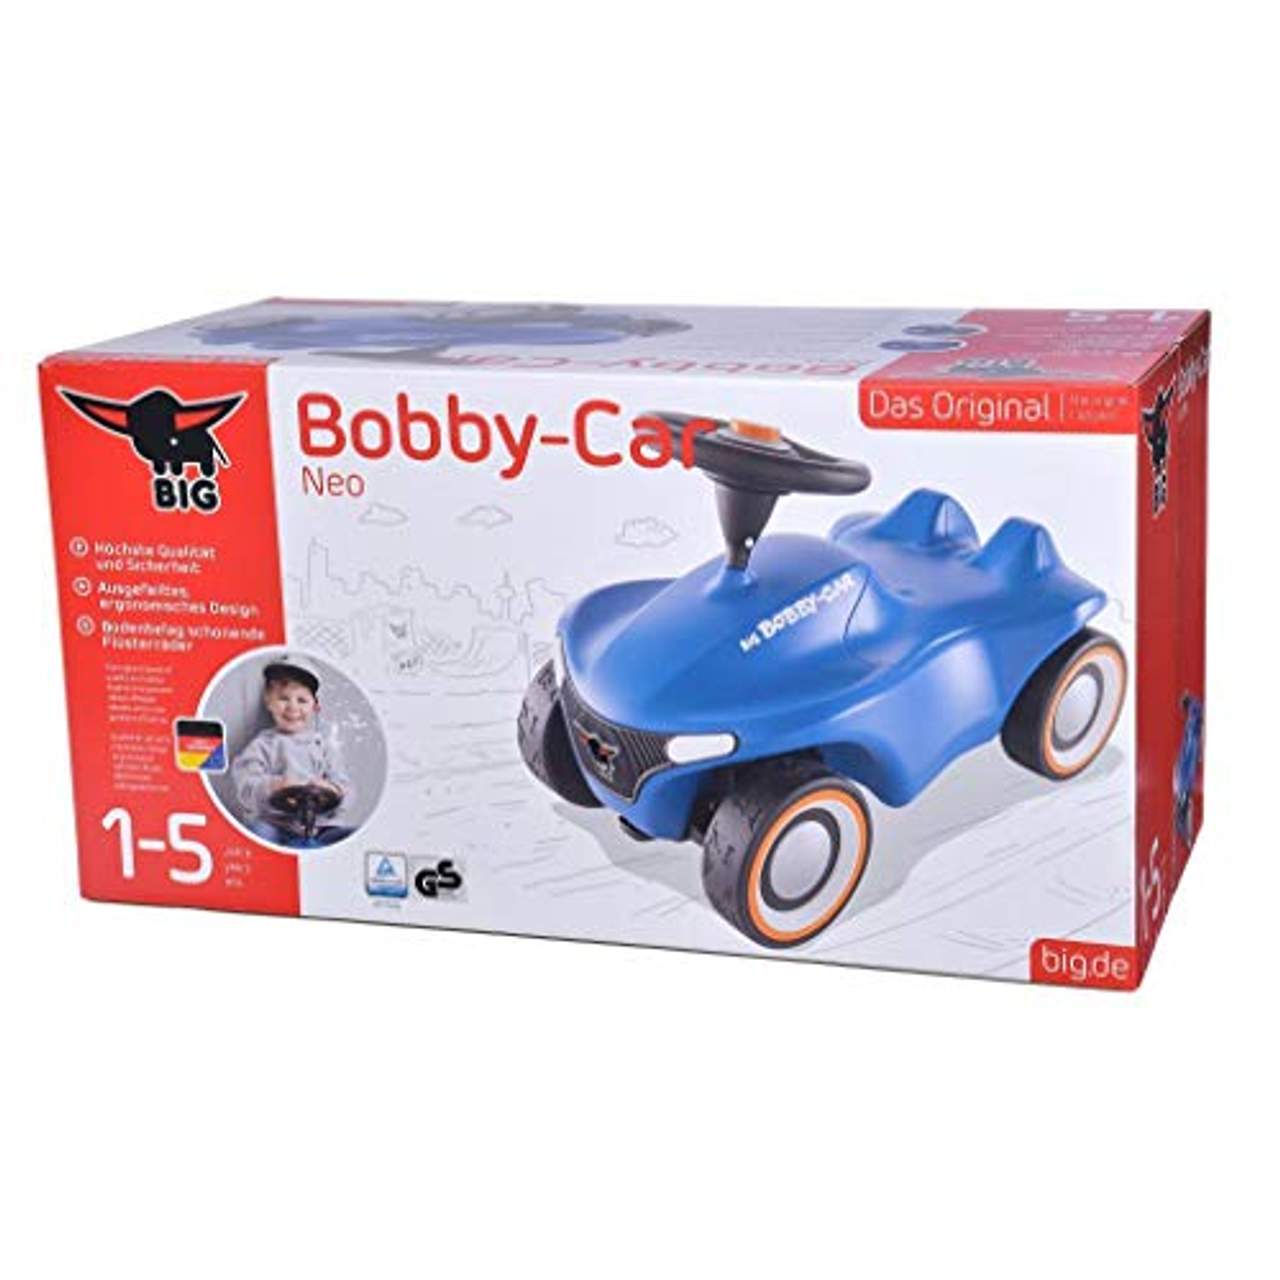 BIG-Bobby-Car Neo Blau Rutschfahrzeug